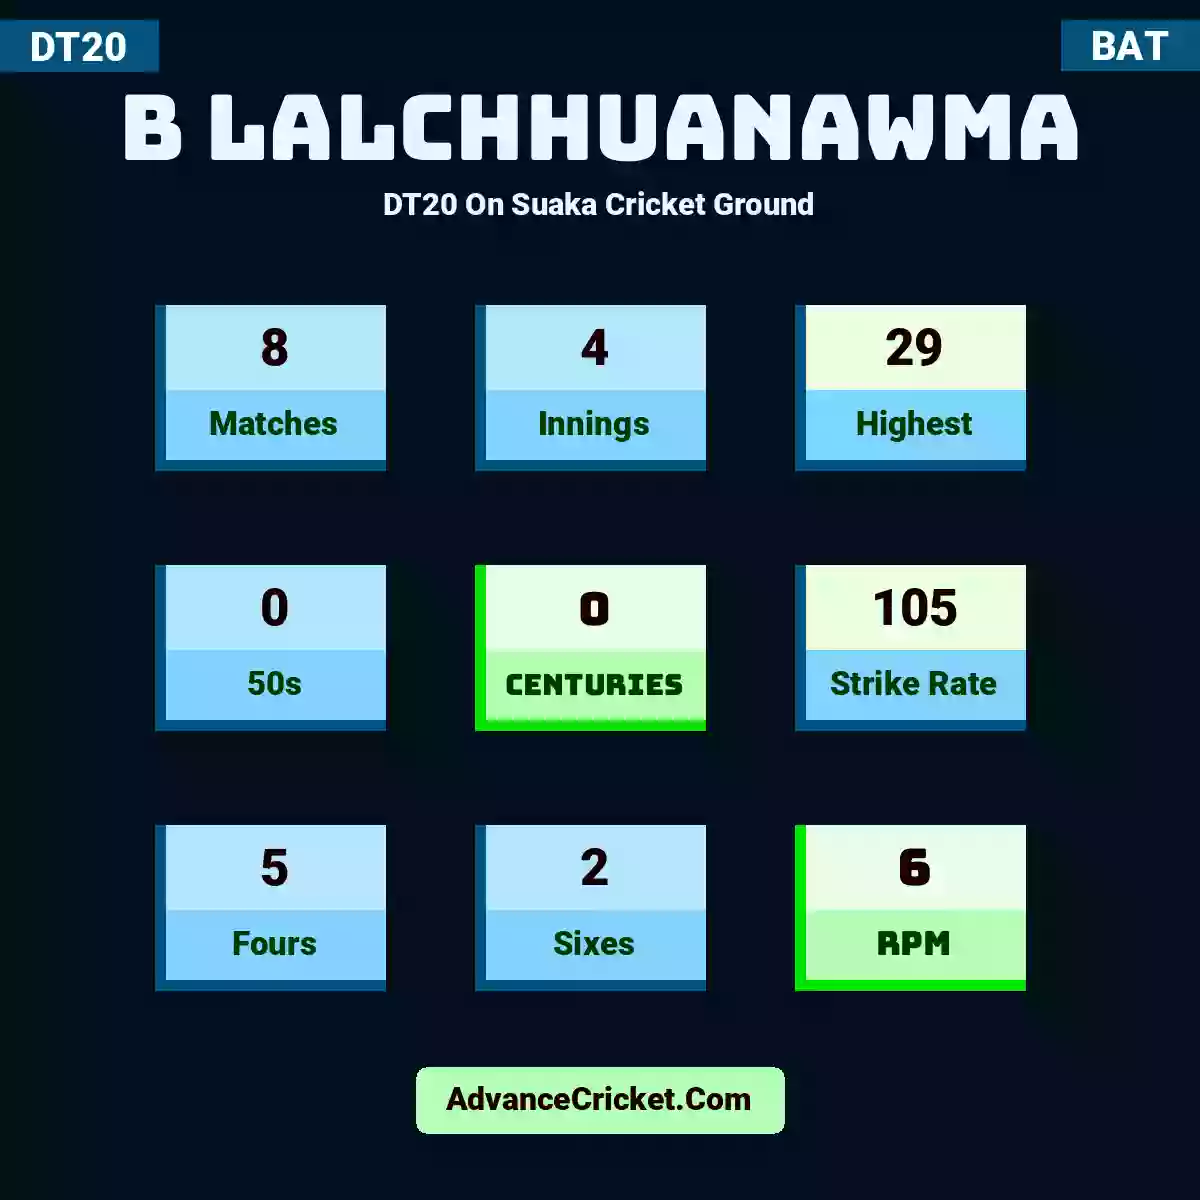 B Lalchhuanawma DT20  On Suaka Cricket Ground, B Lalchhuanawma played 8 matches, scored 29 runs as highest, 0 half-centuries, and 0 centuries, with a strike rate of 105. B,Lalchhuanawma hit 5 fours and 2 sixes, with an RPM of 6.